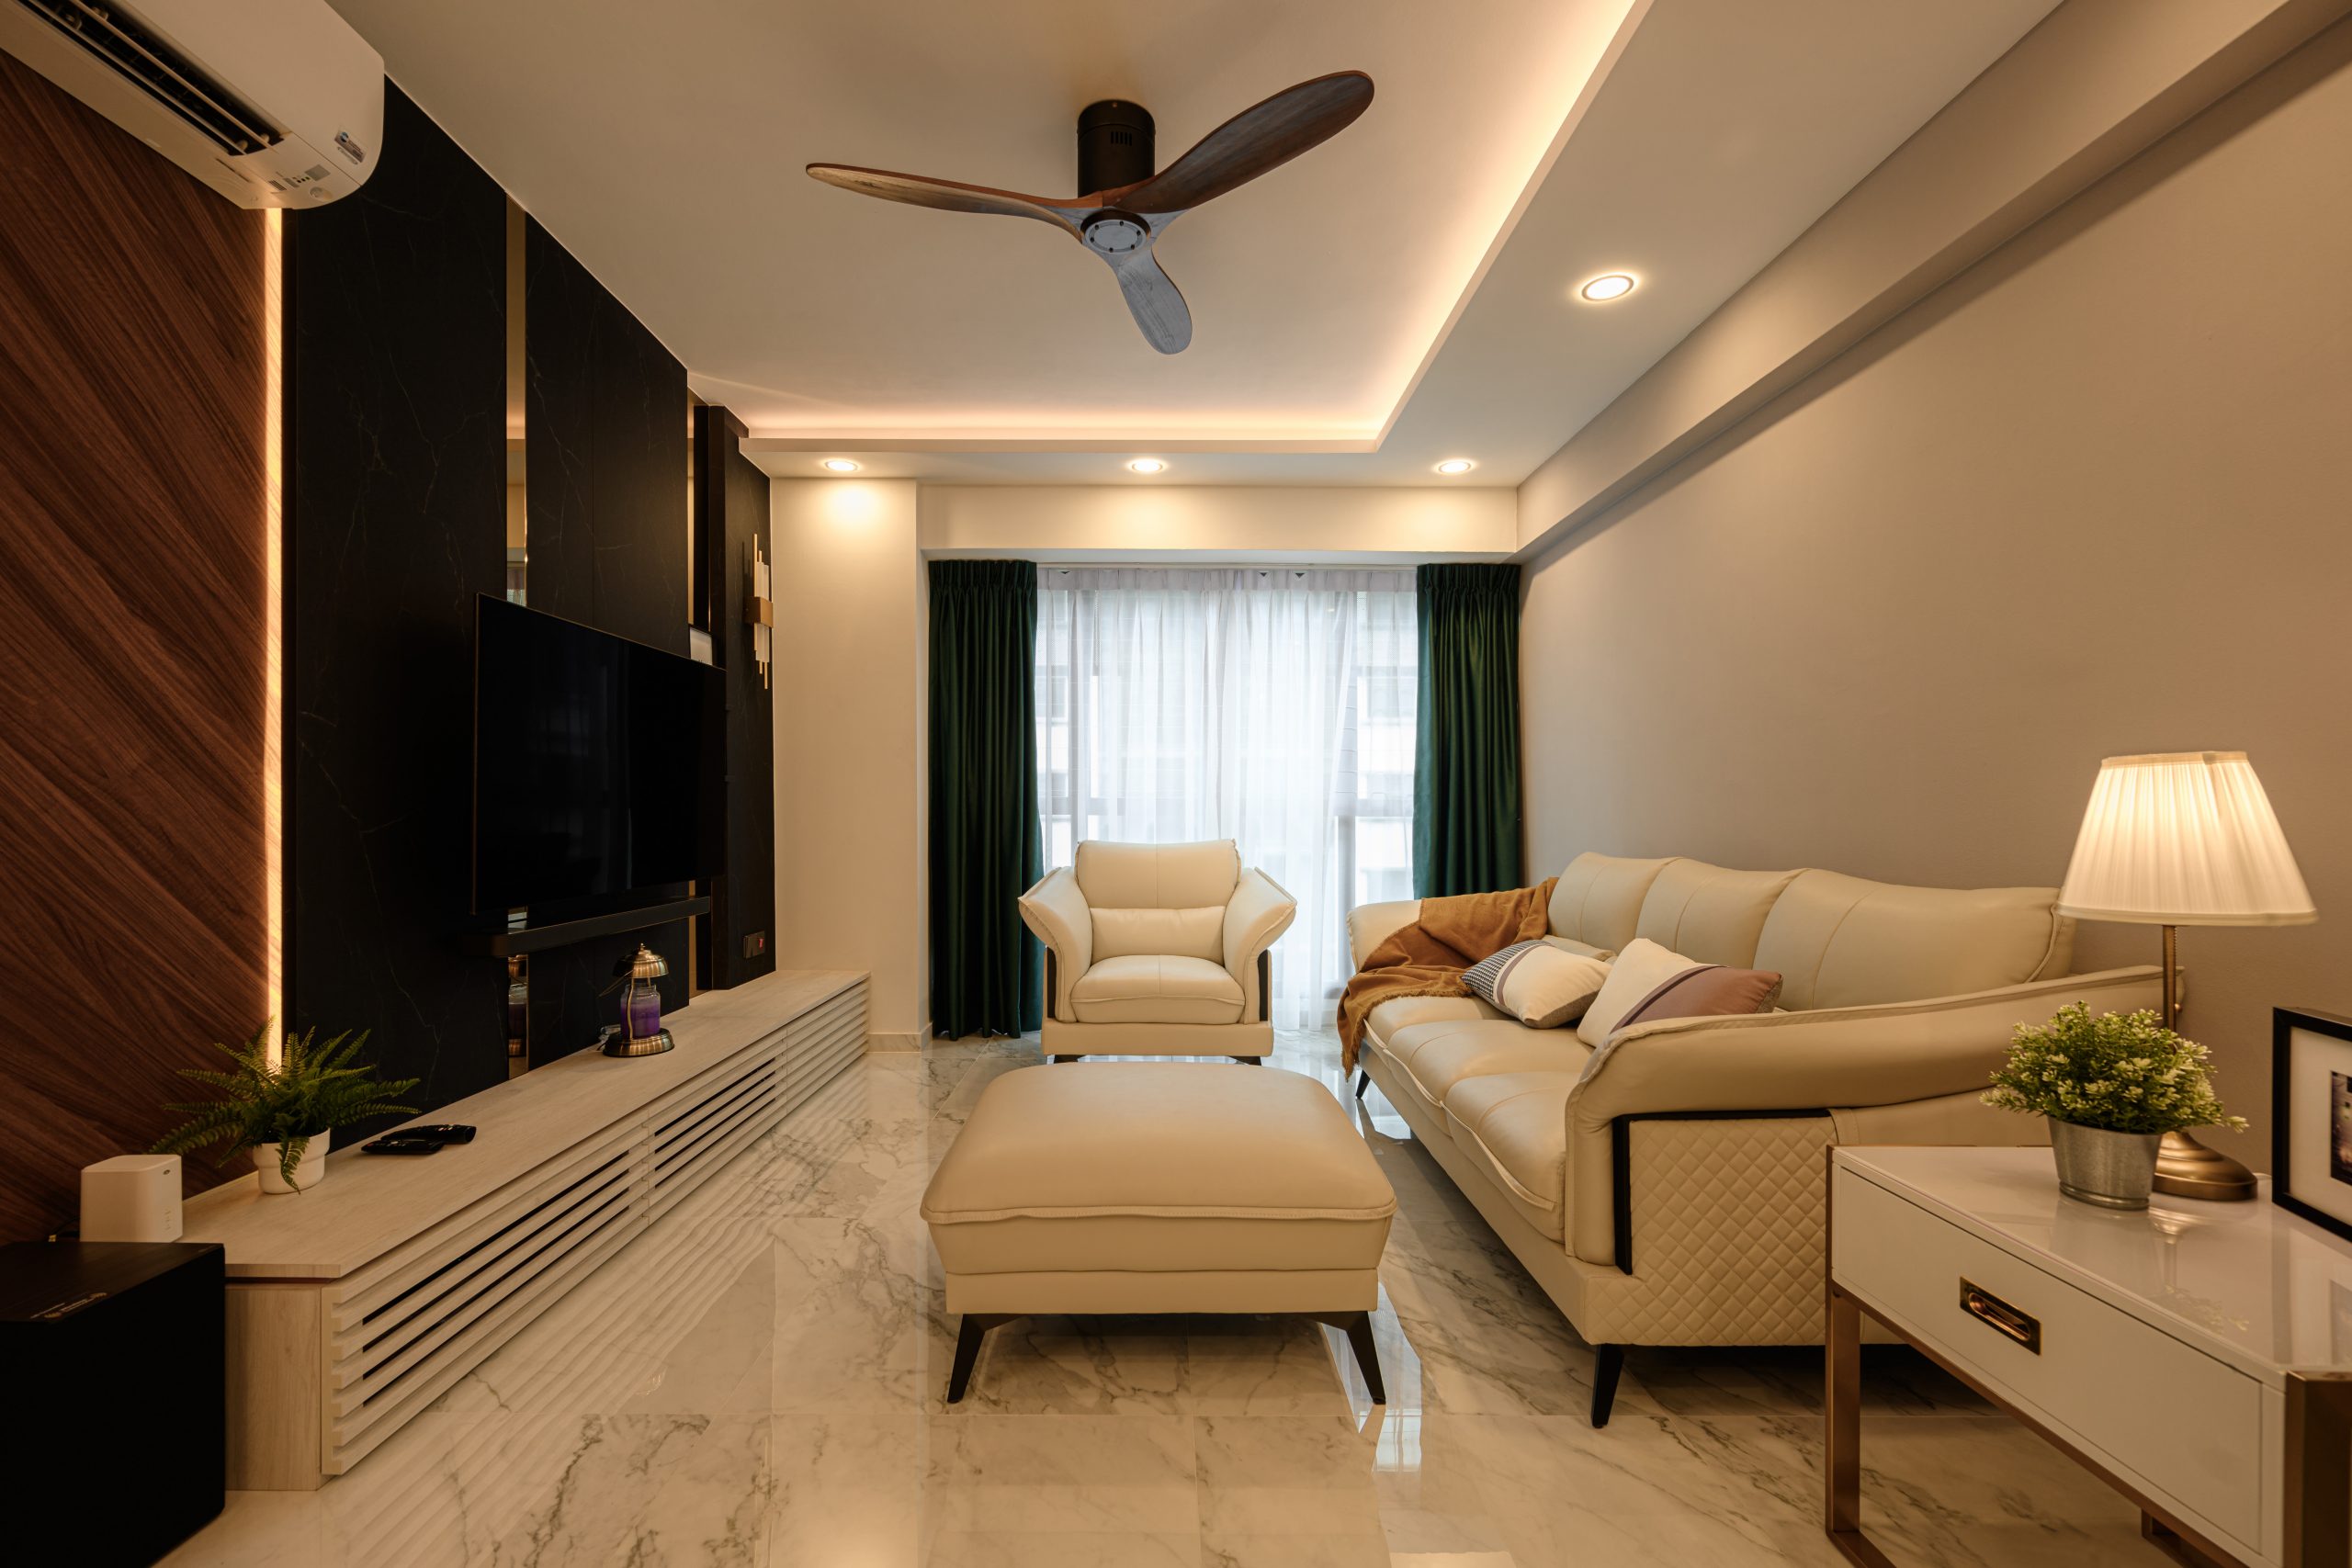 wallpaper designs for living room singapore